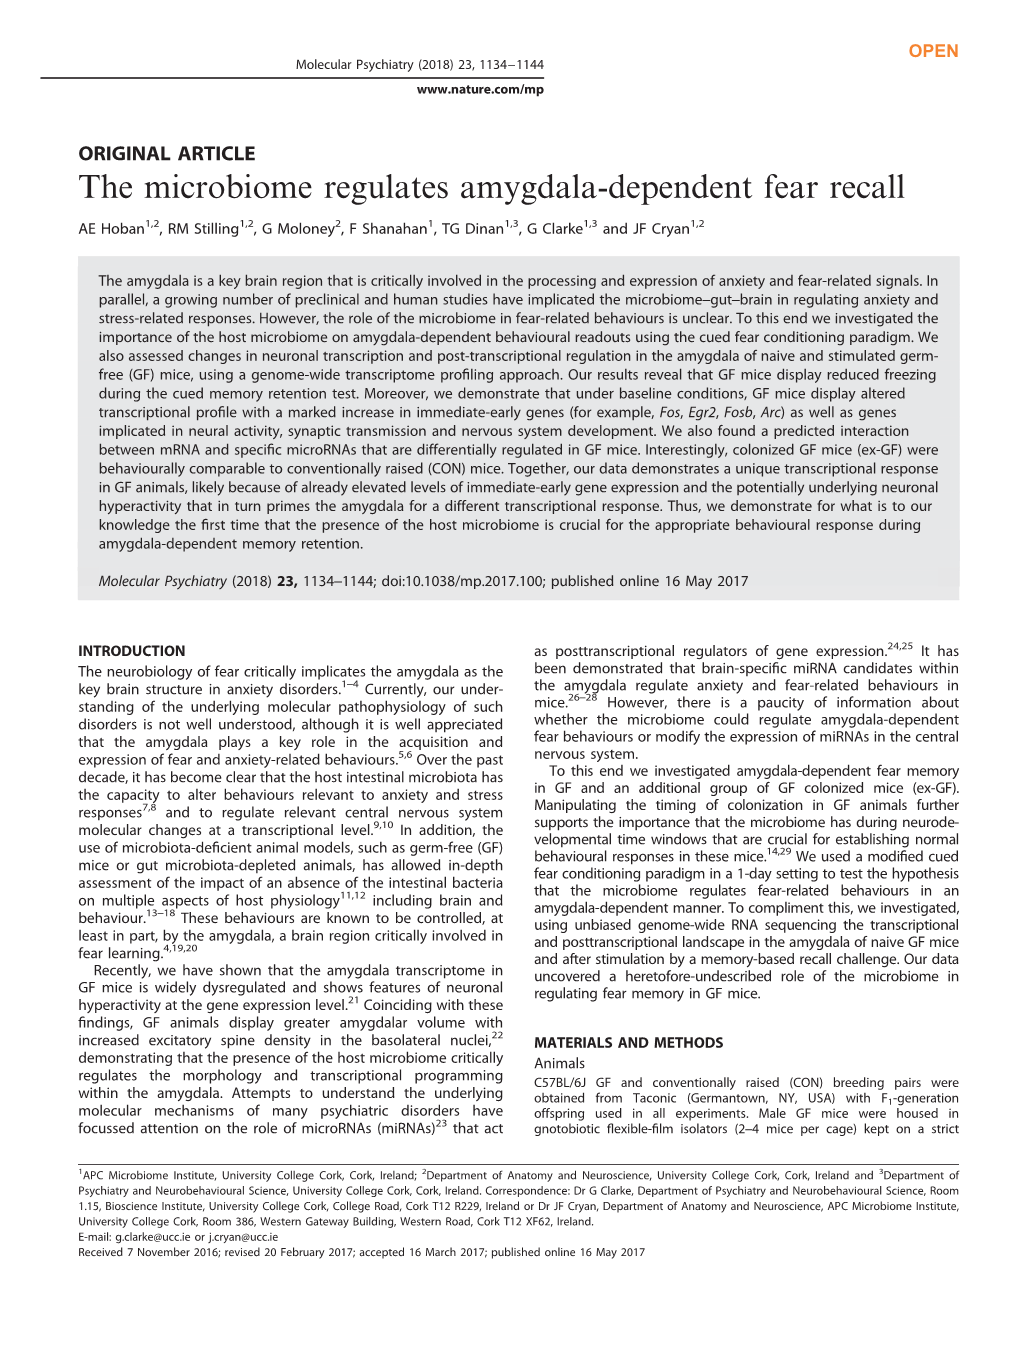 The Microbiome Regulates Amygdala-Dependent Fear Recall